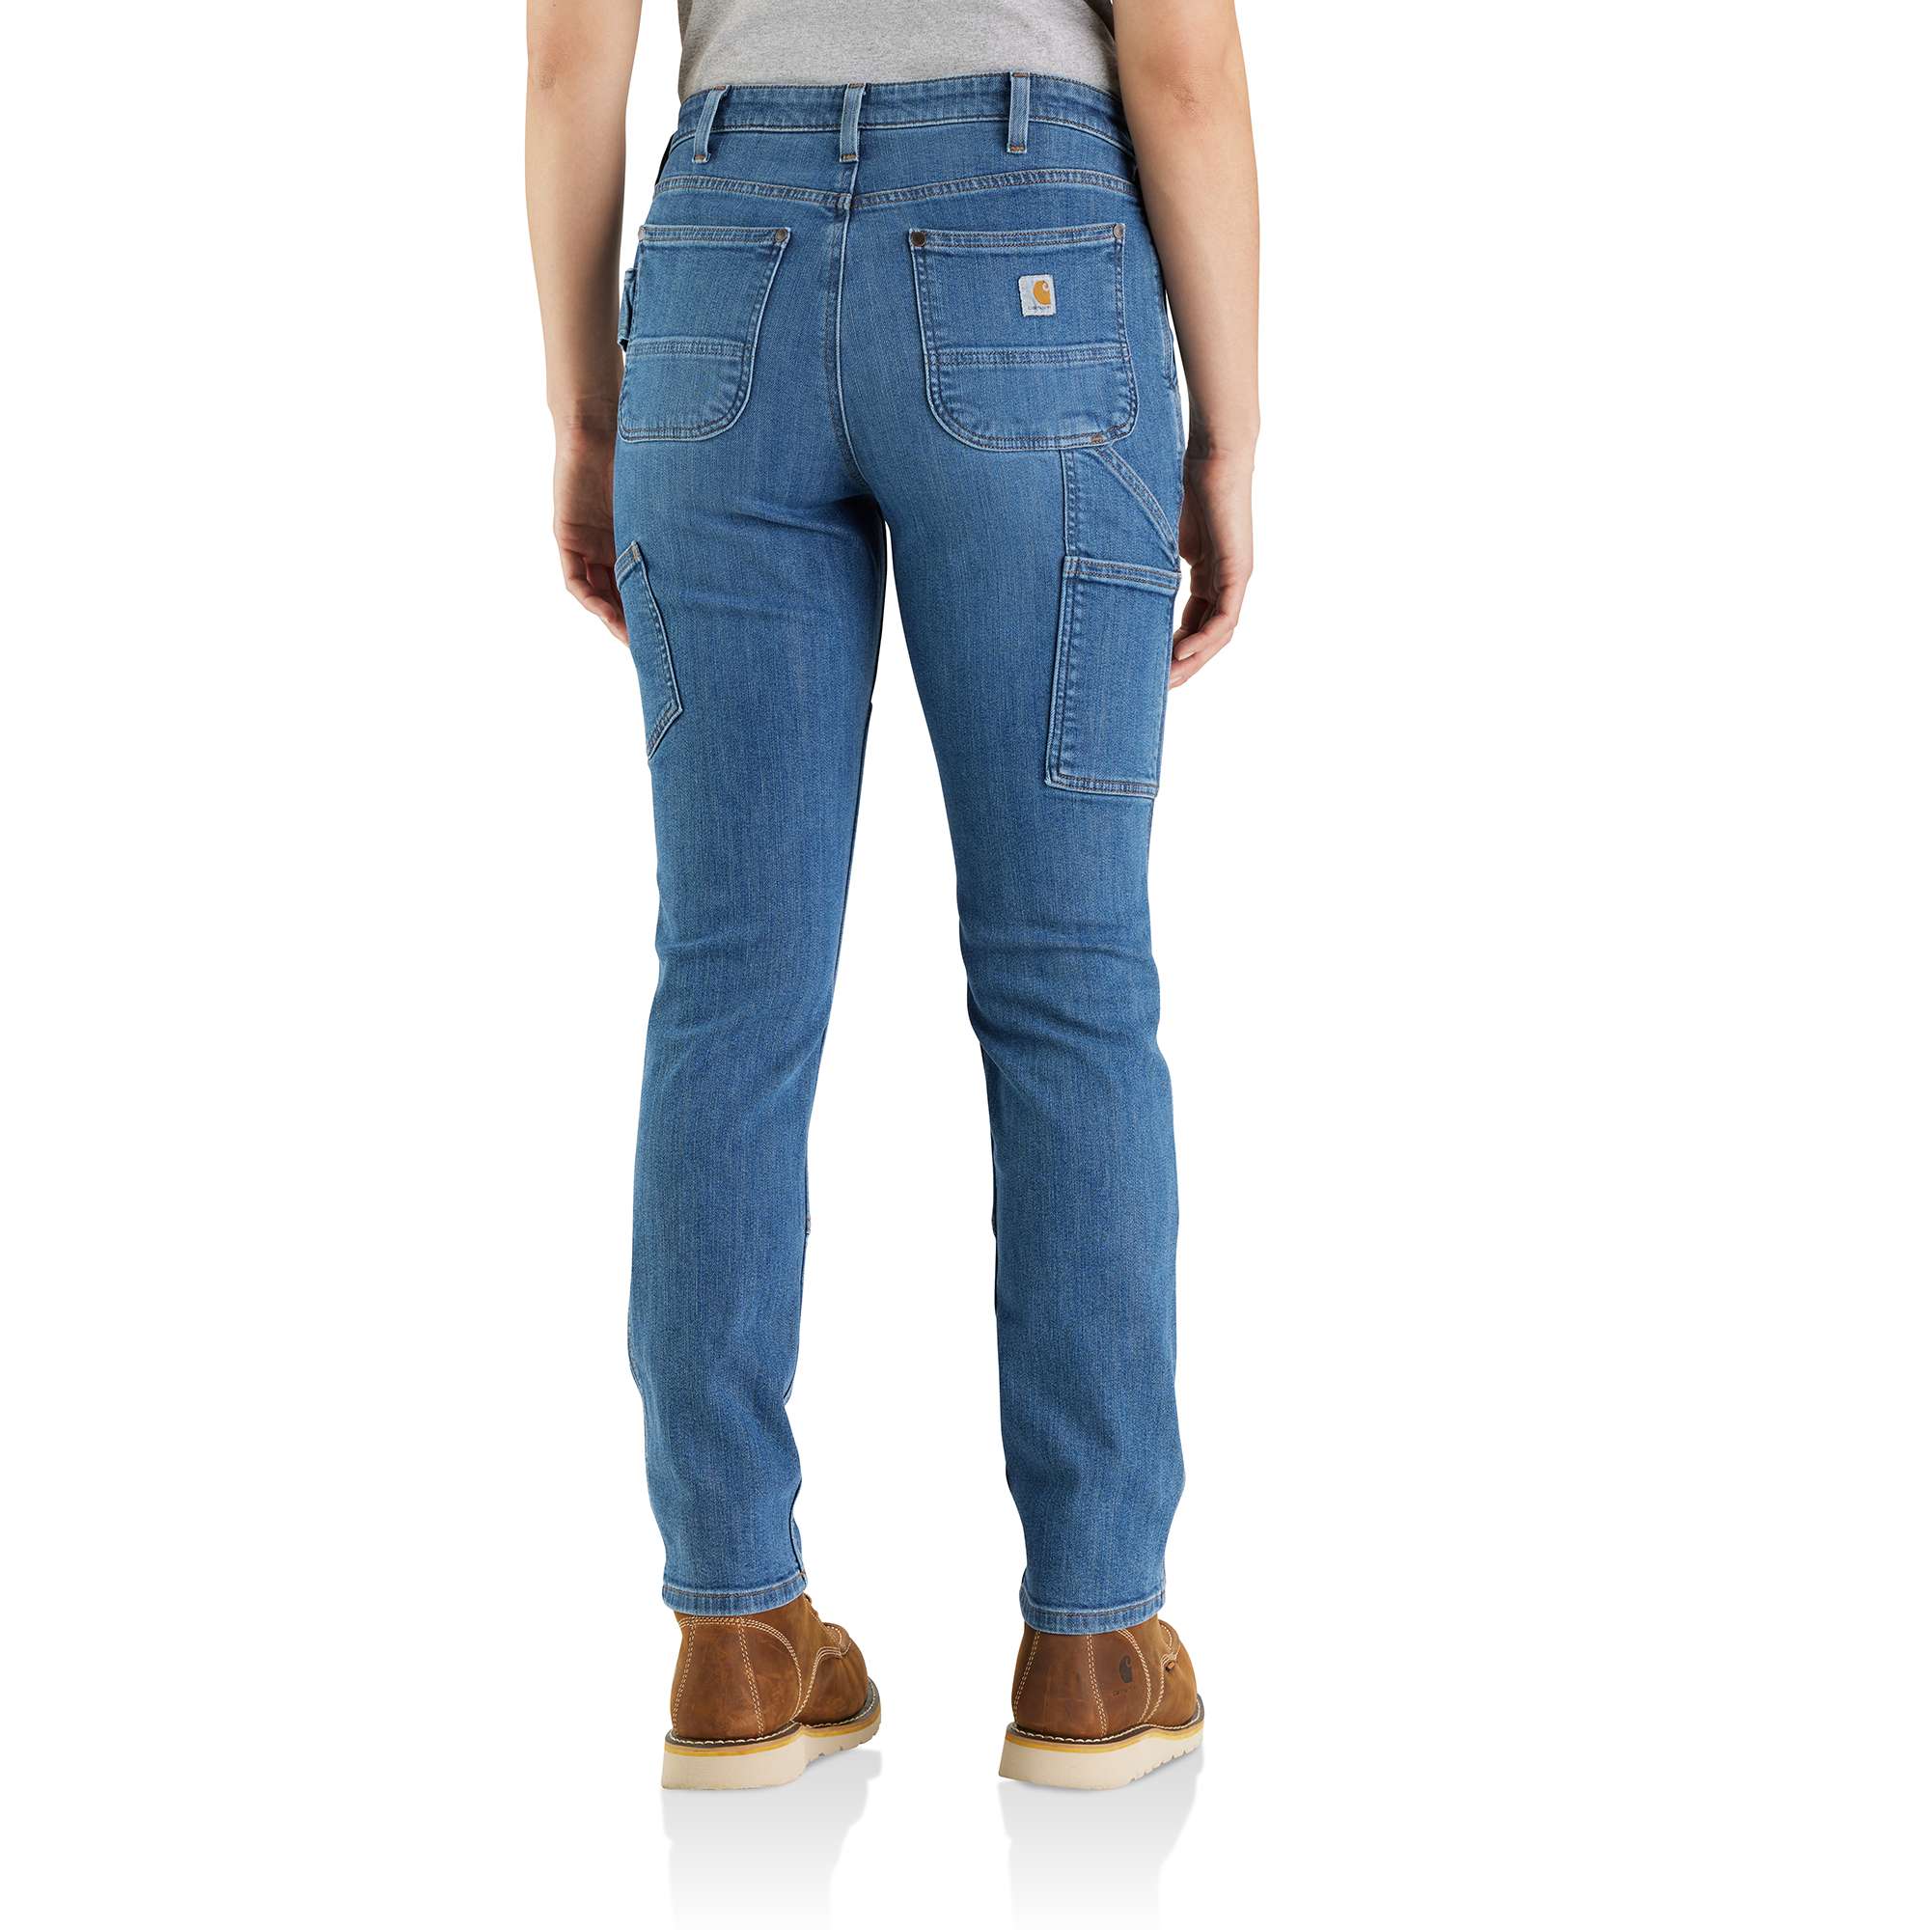 Trousers & Jeans for Women, Carhartt®